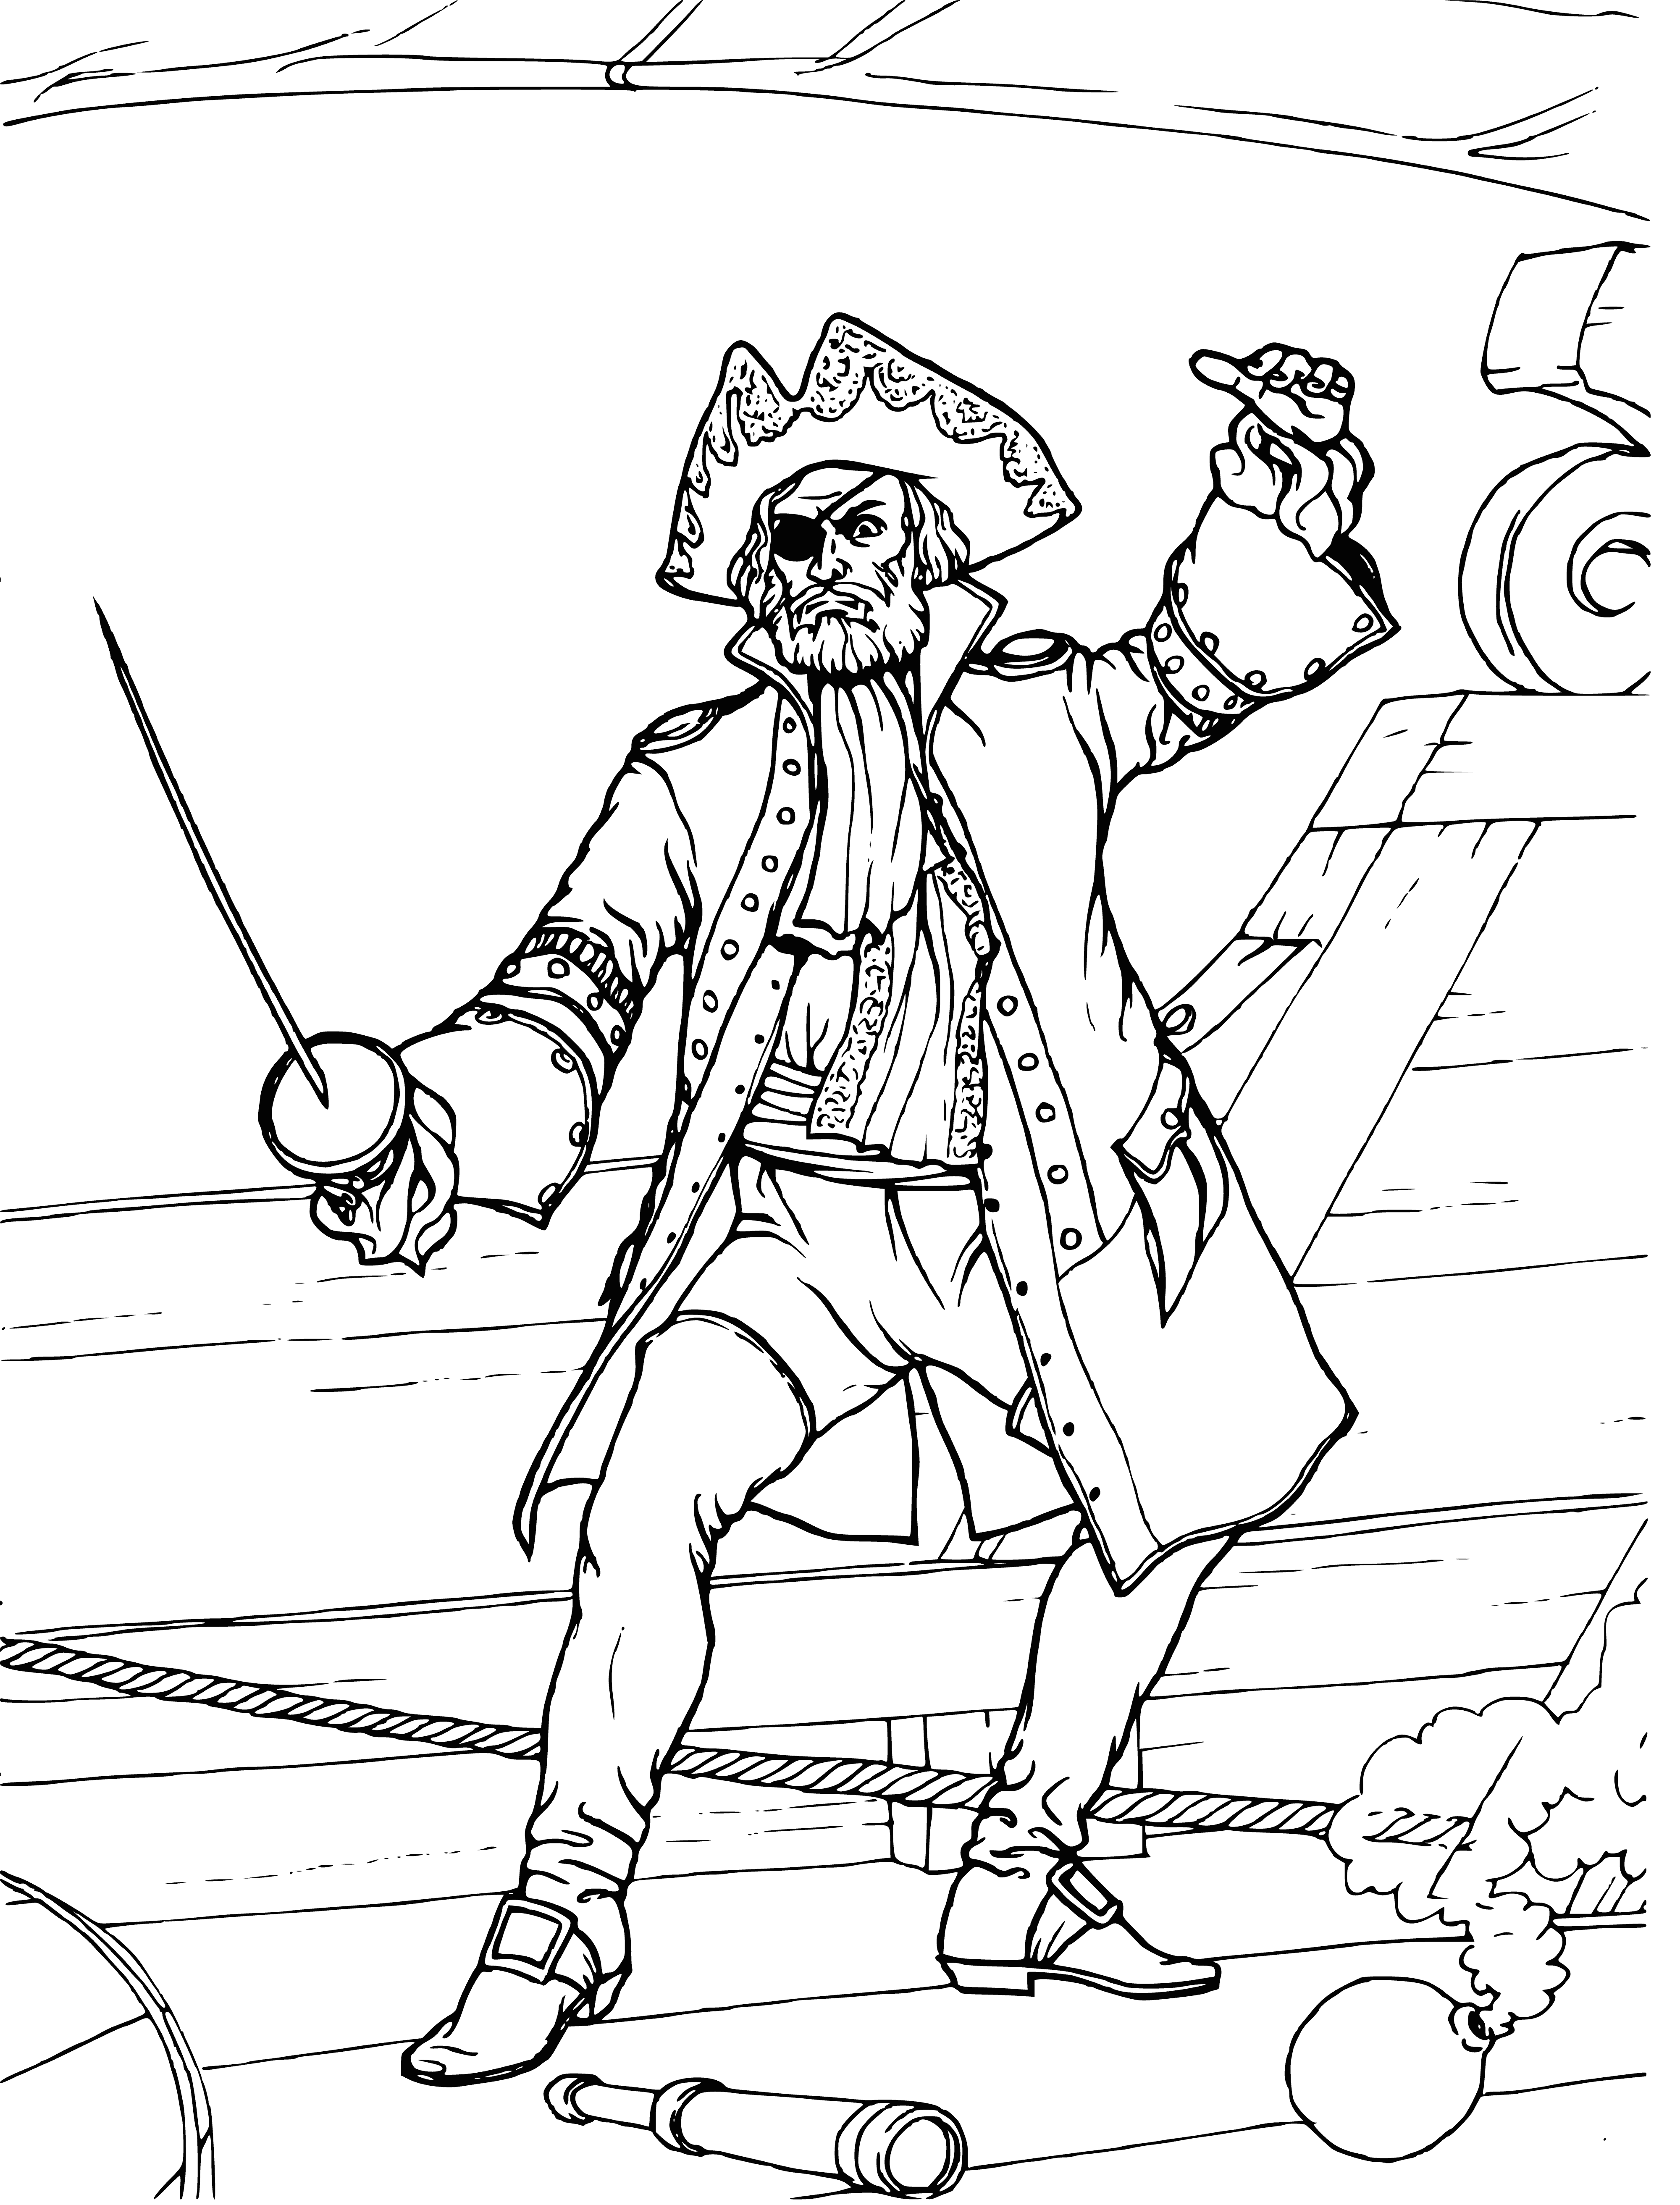 coloring page: Pirate wields sword & knife, wearing bandana, shirt w/vest, pants w/belt & sword holster, patch over one eye & earrings in both ears.